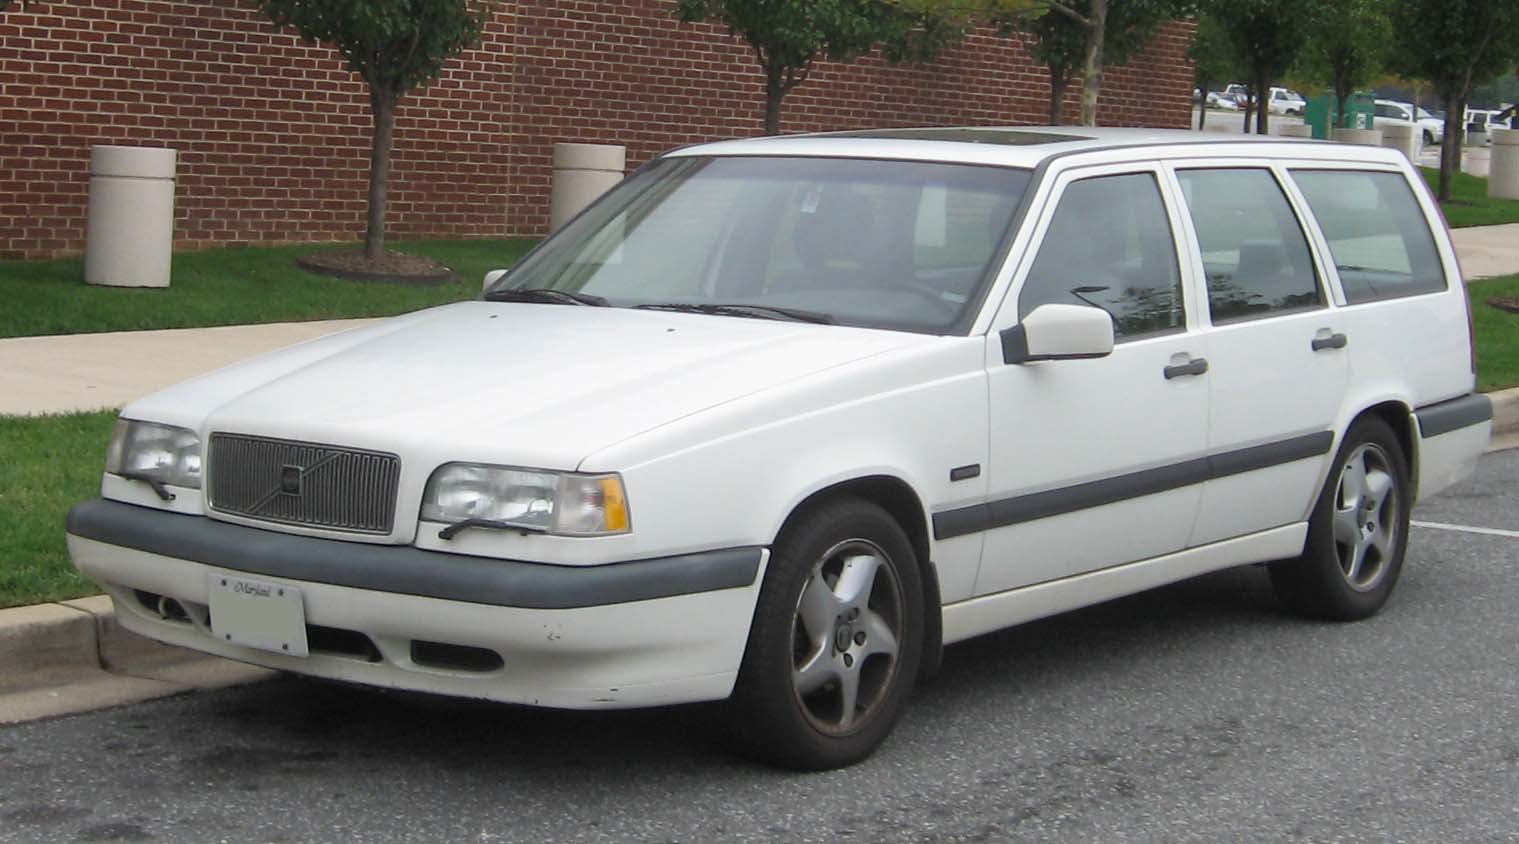 File:Volvo-850-wagon-front.jpg